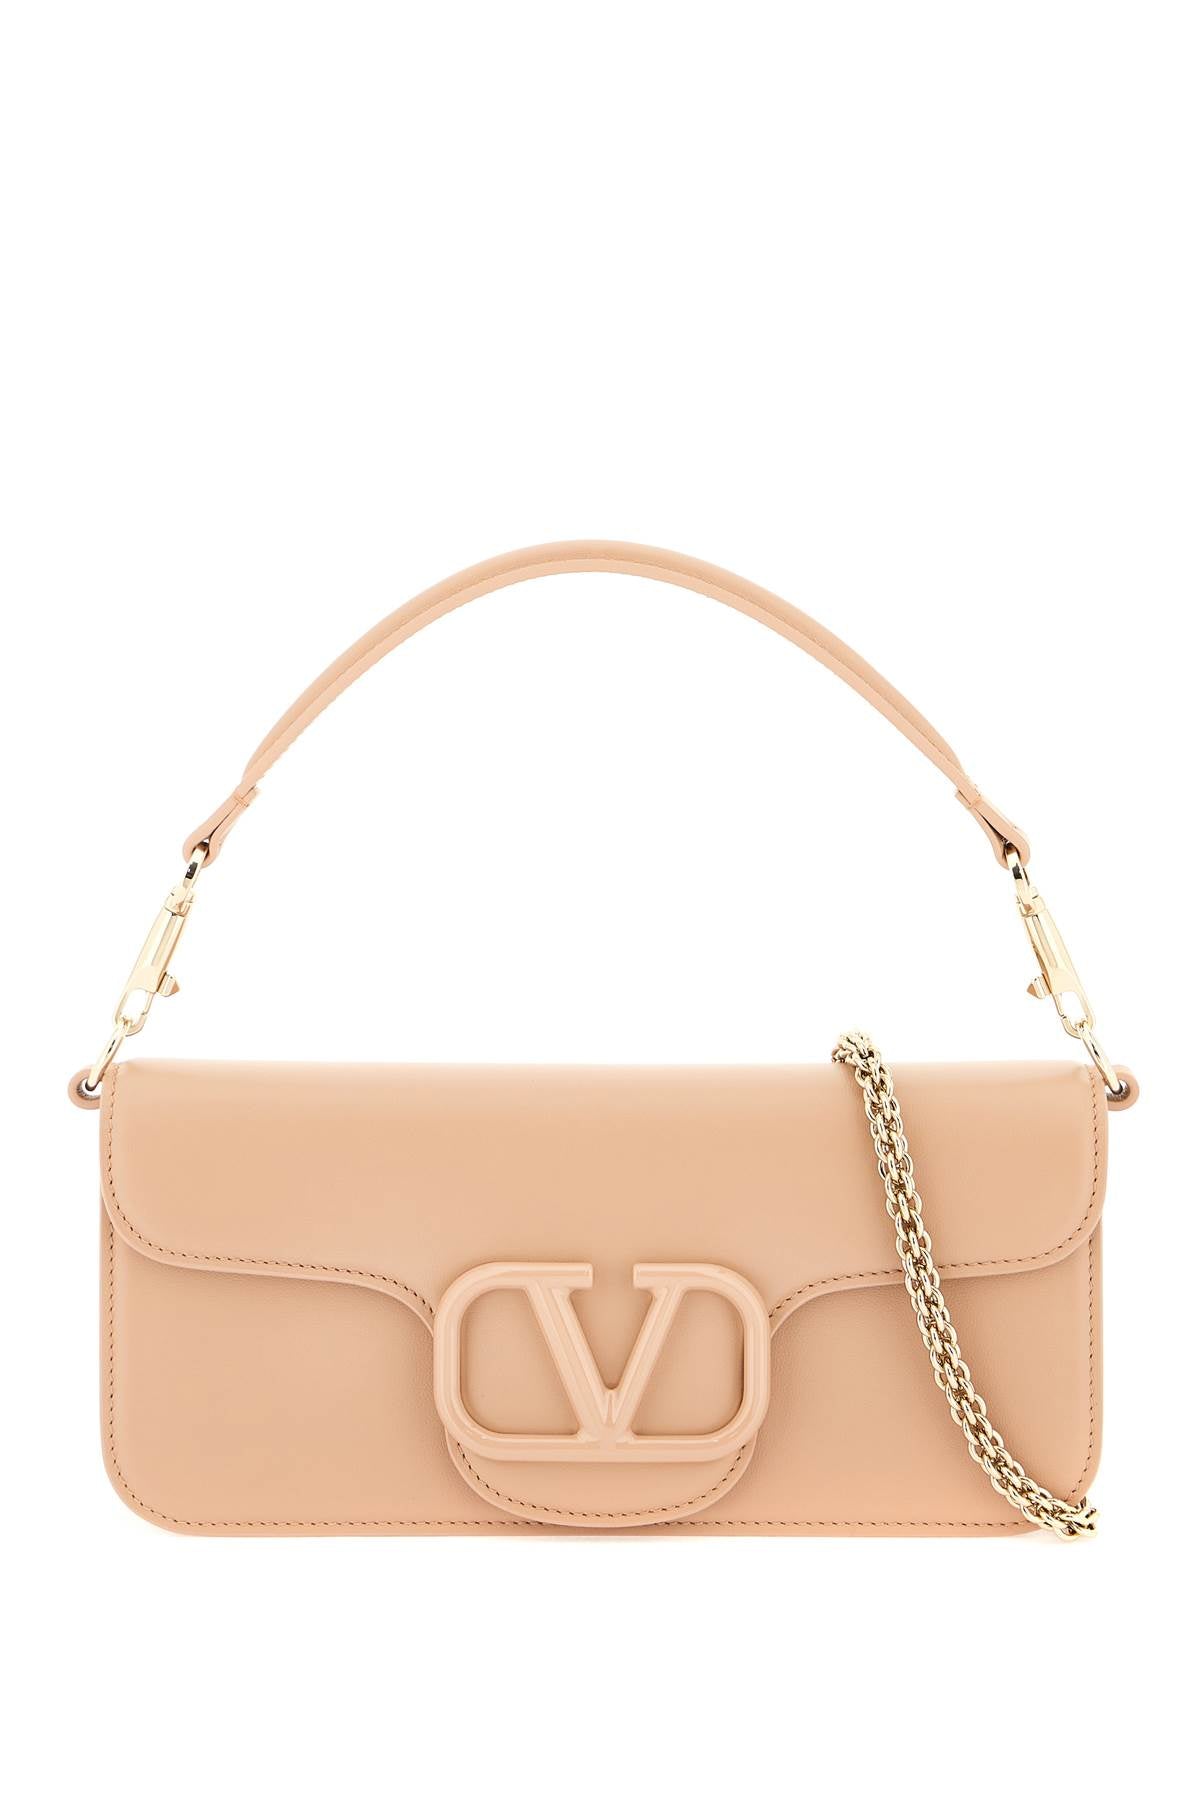 VALENTINO GARAVANI Luxurious Shoulder Bag for Women - Grey Saffiano Leather with Tonal Vlogo Signature and Platinum Finish